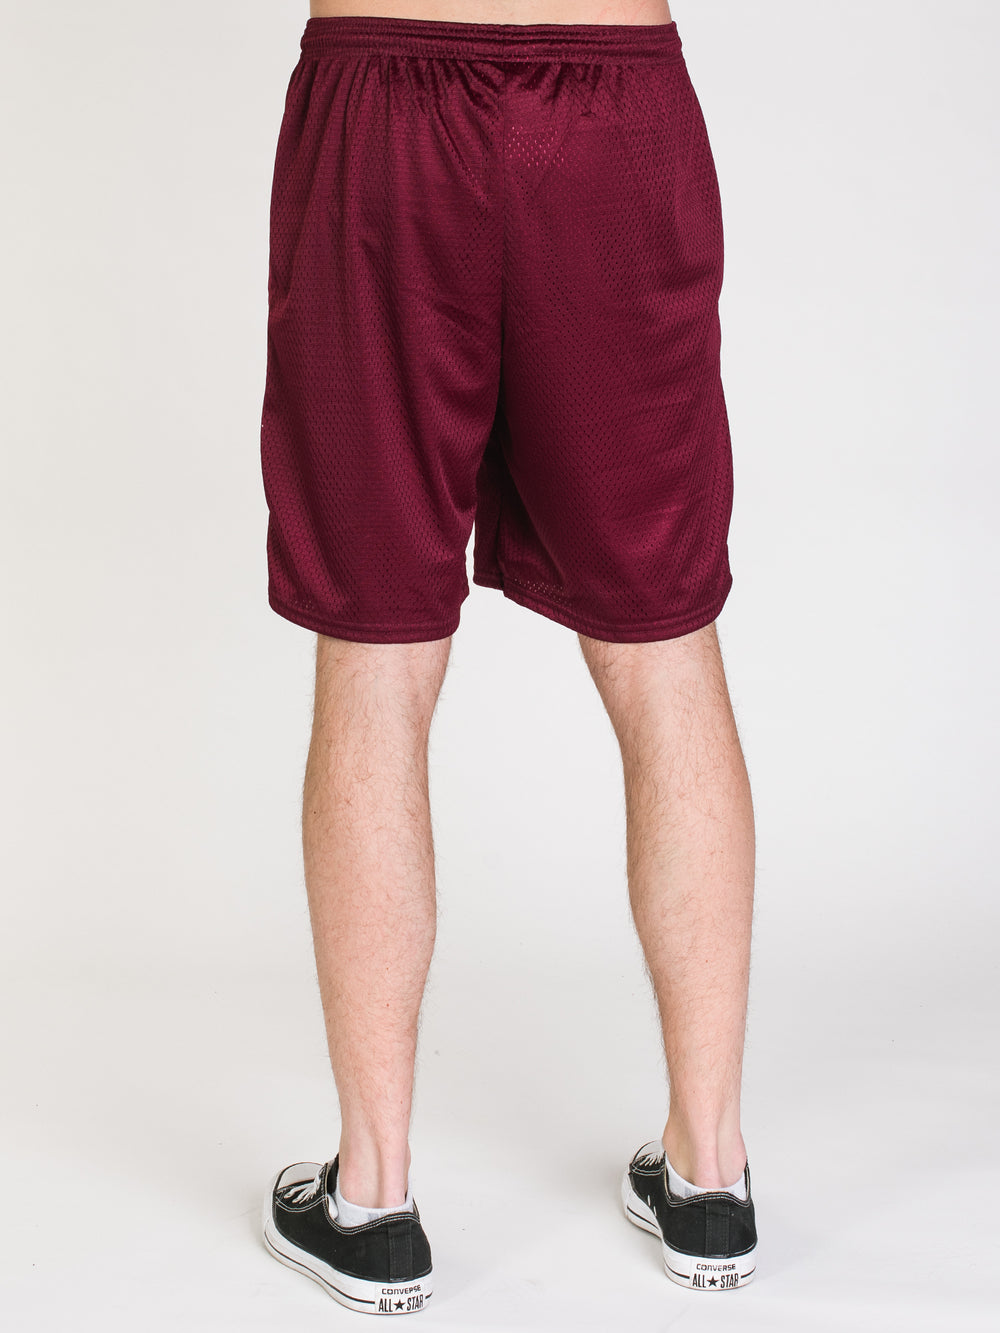 Champion Men's Classic Graphic Mesh Short (Size S) Crimson, Polyester - ShoeMall